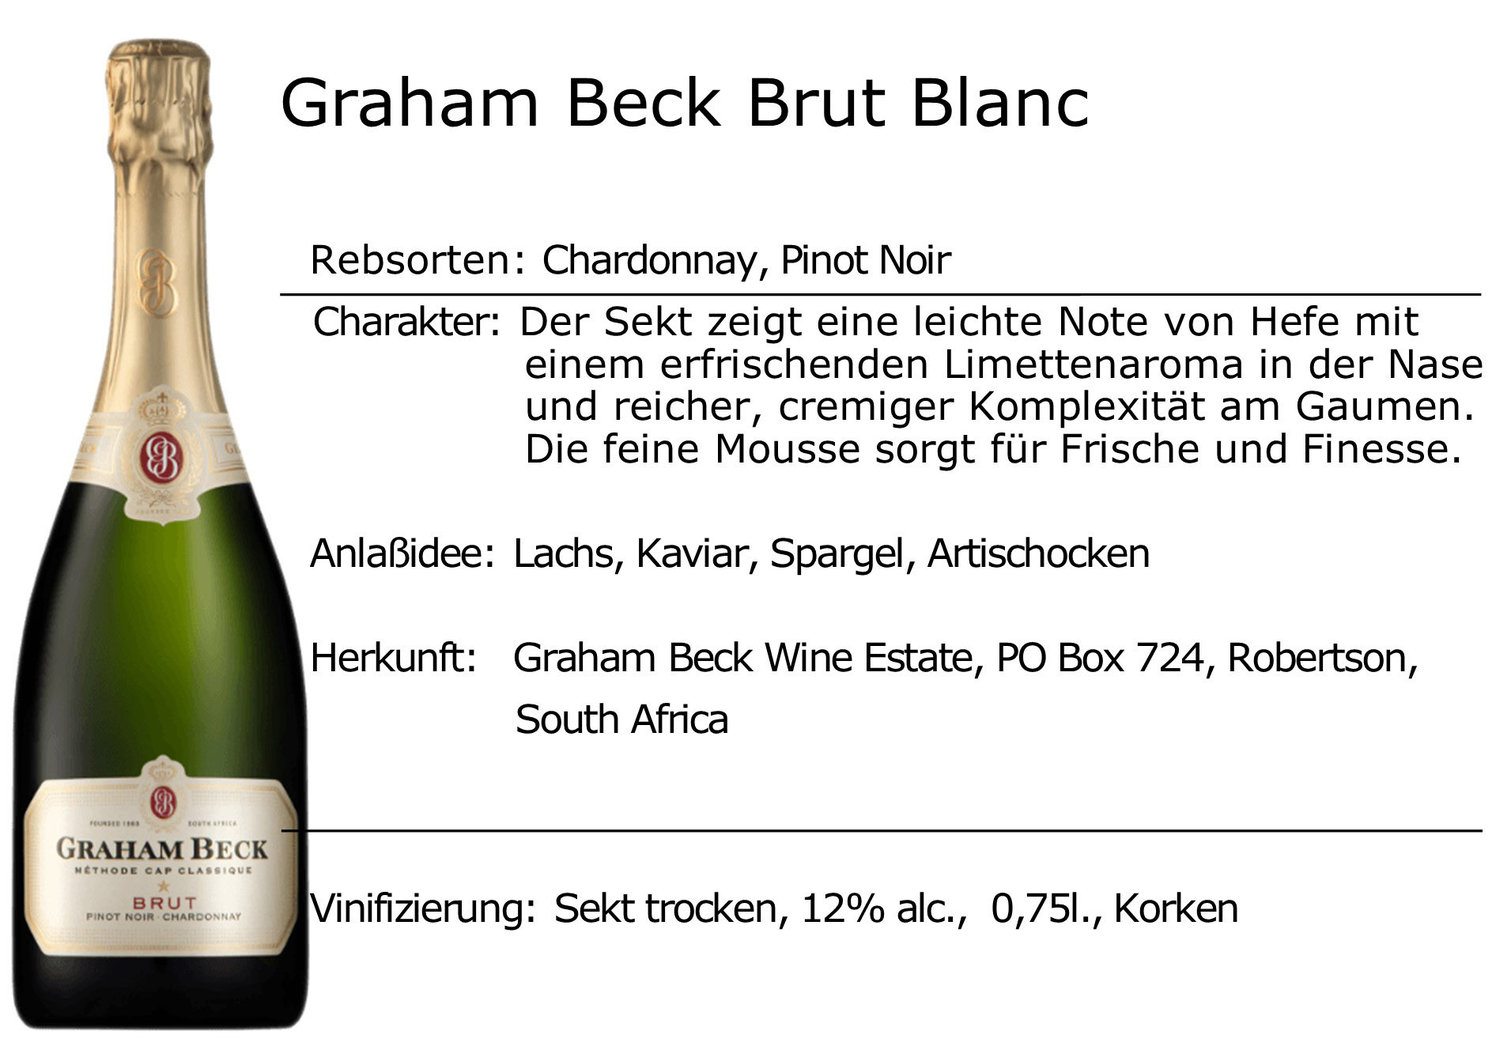 Graham Beck MCC Brut Blanc